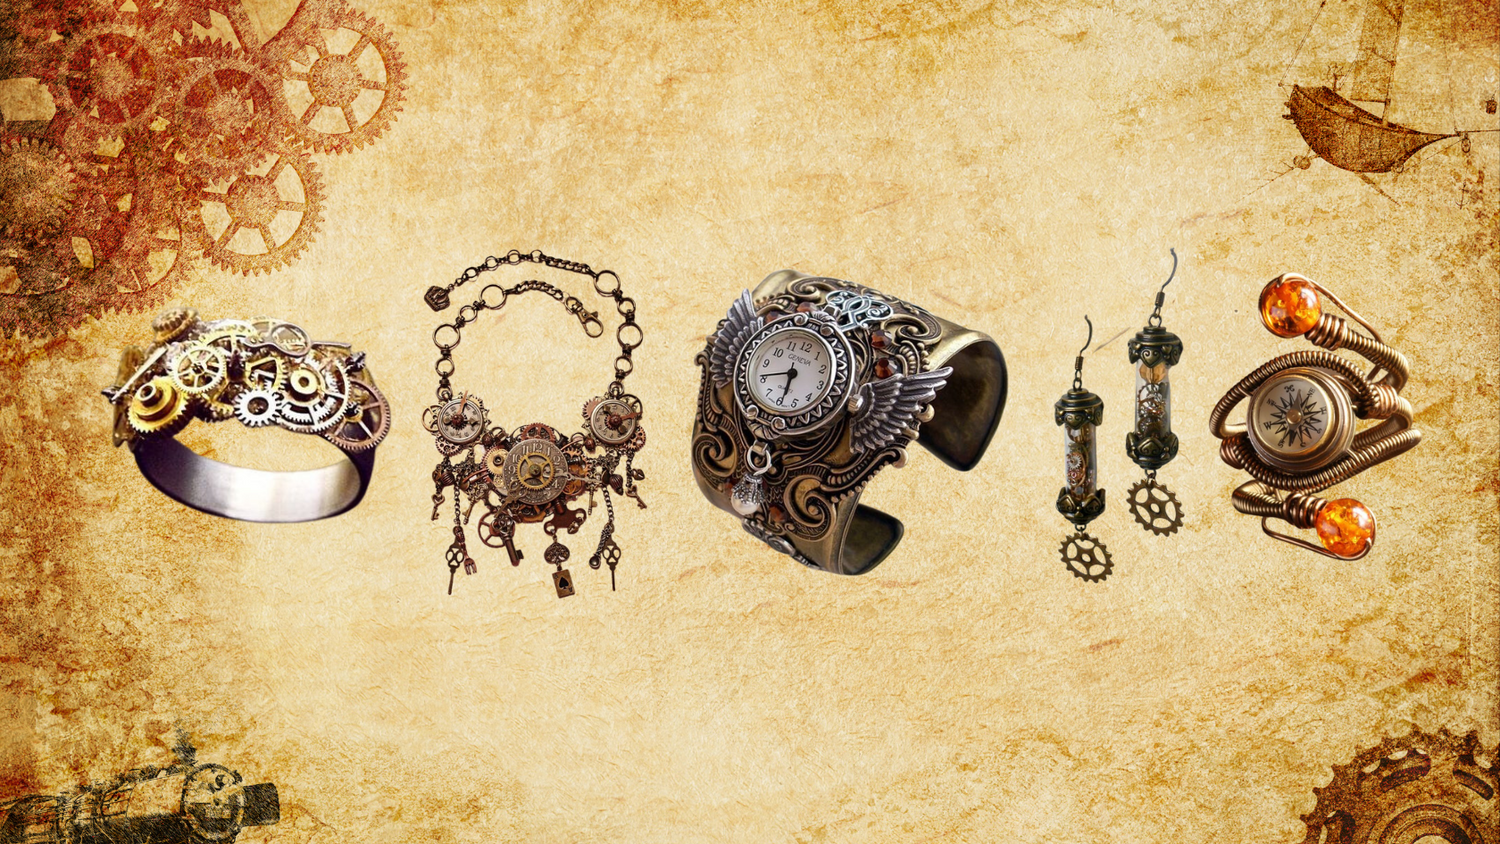 Steampunk Jewelry